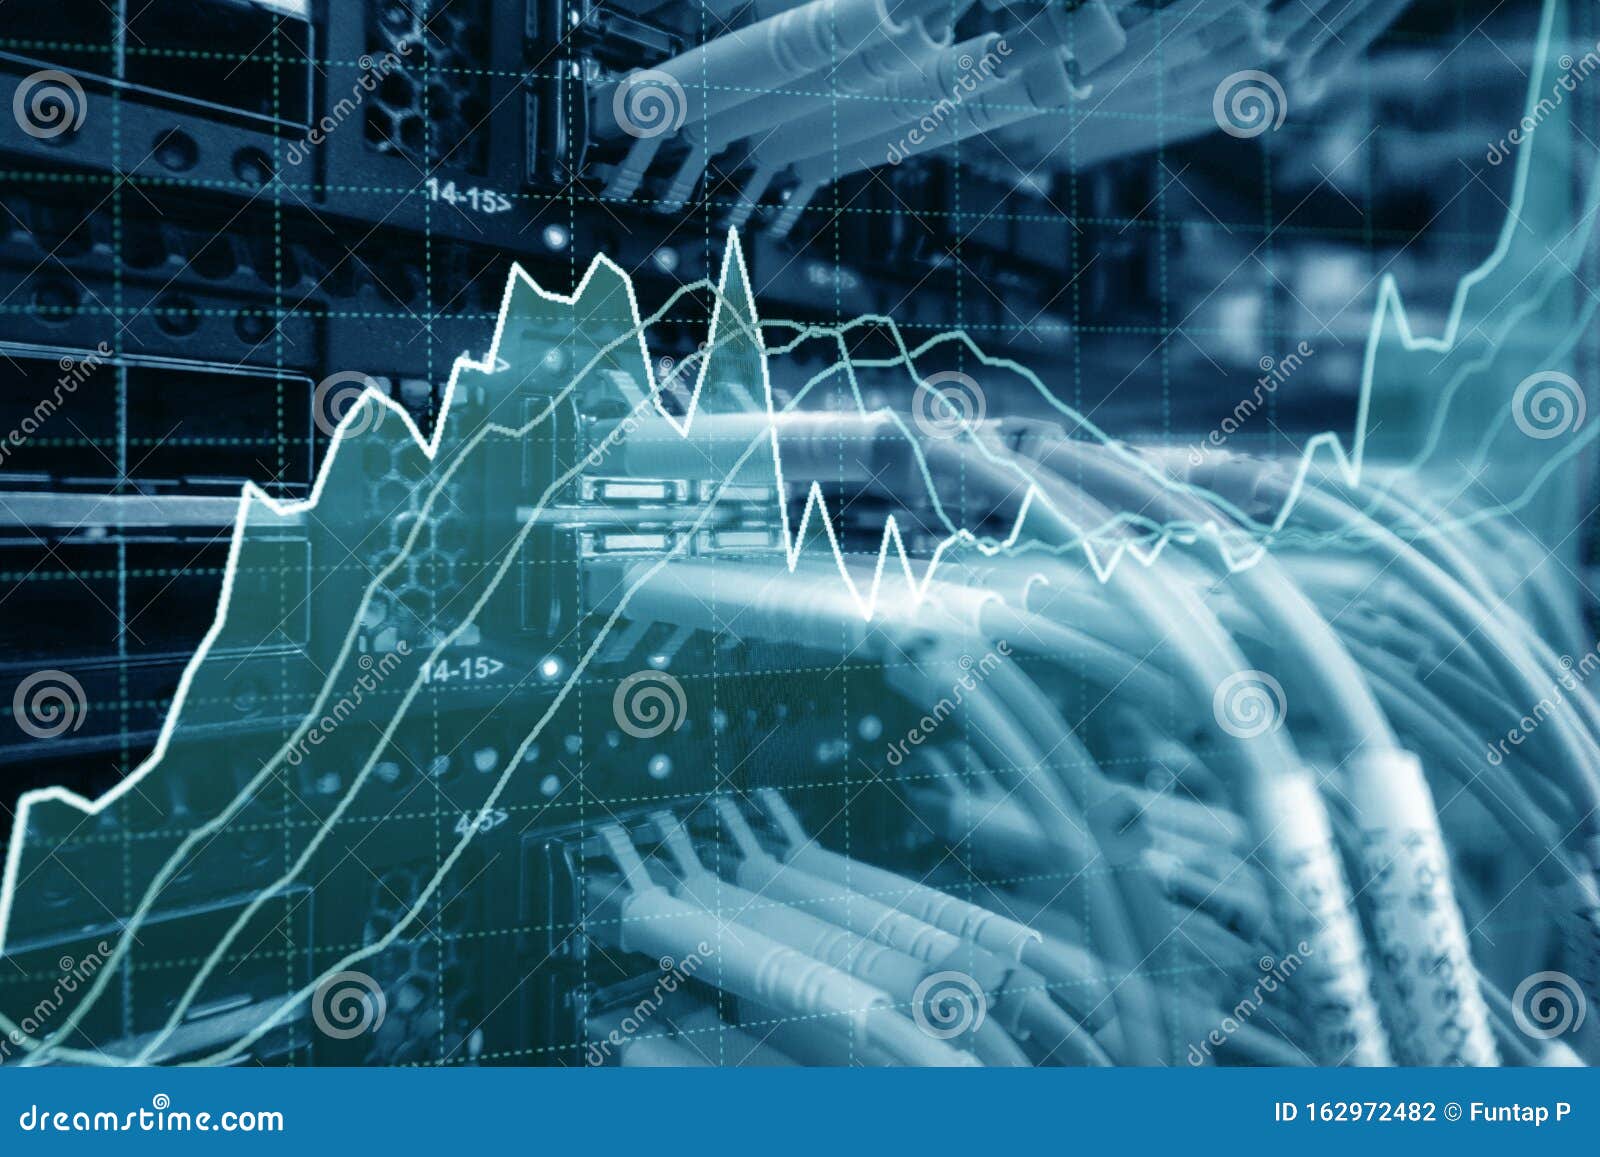 Trading Algorithm. Stock Price Movement Analysis. Stock Charts on